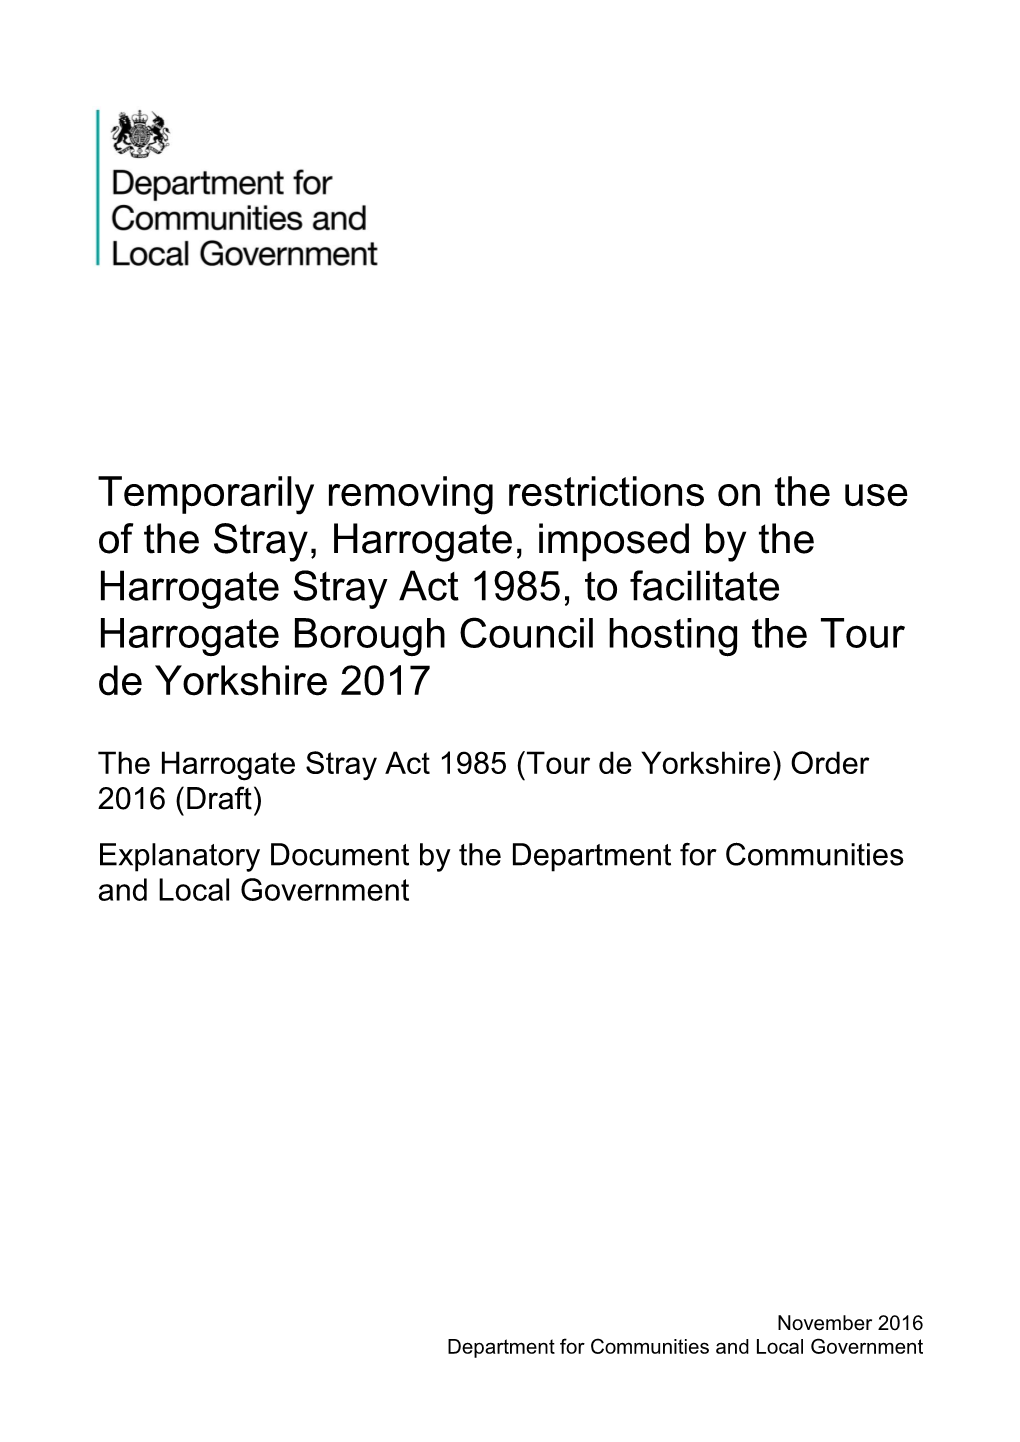 Harrogate Stray Act 1985, to Facilitate Harrogate Borough Council Hosting the Tour De Yorkshire 2017